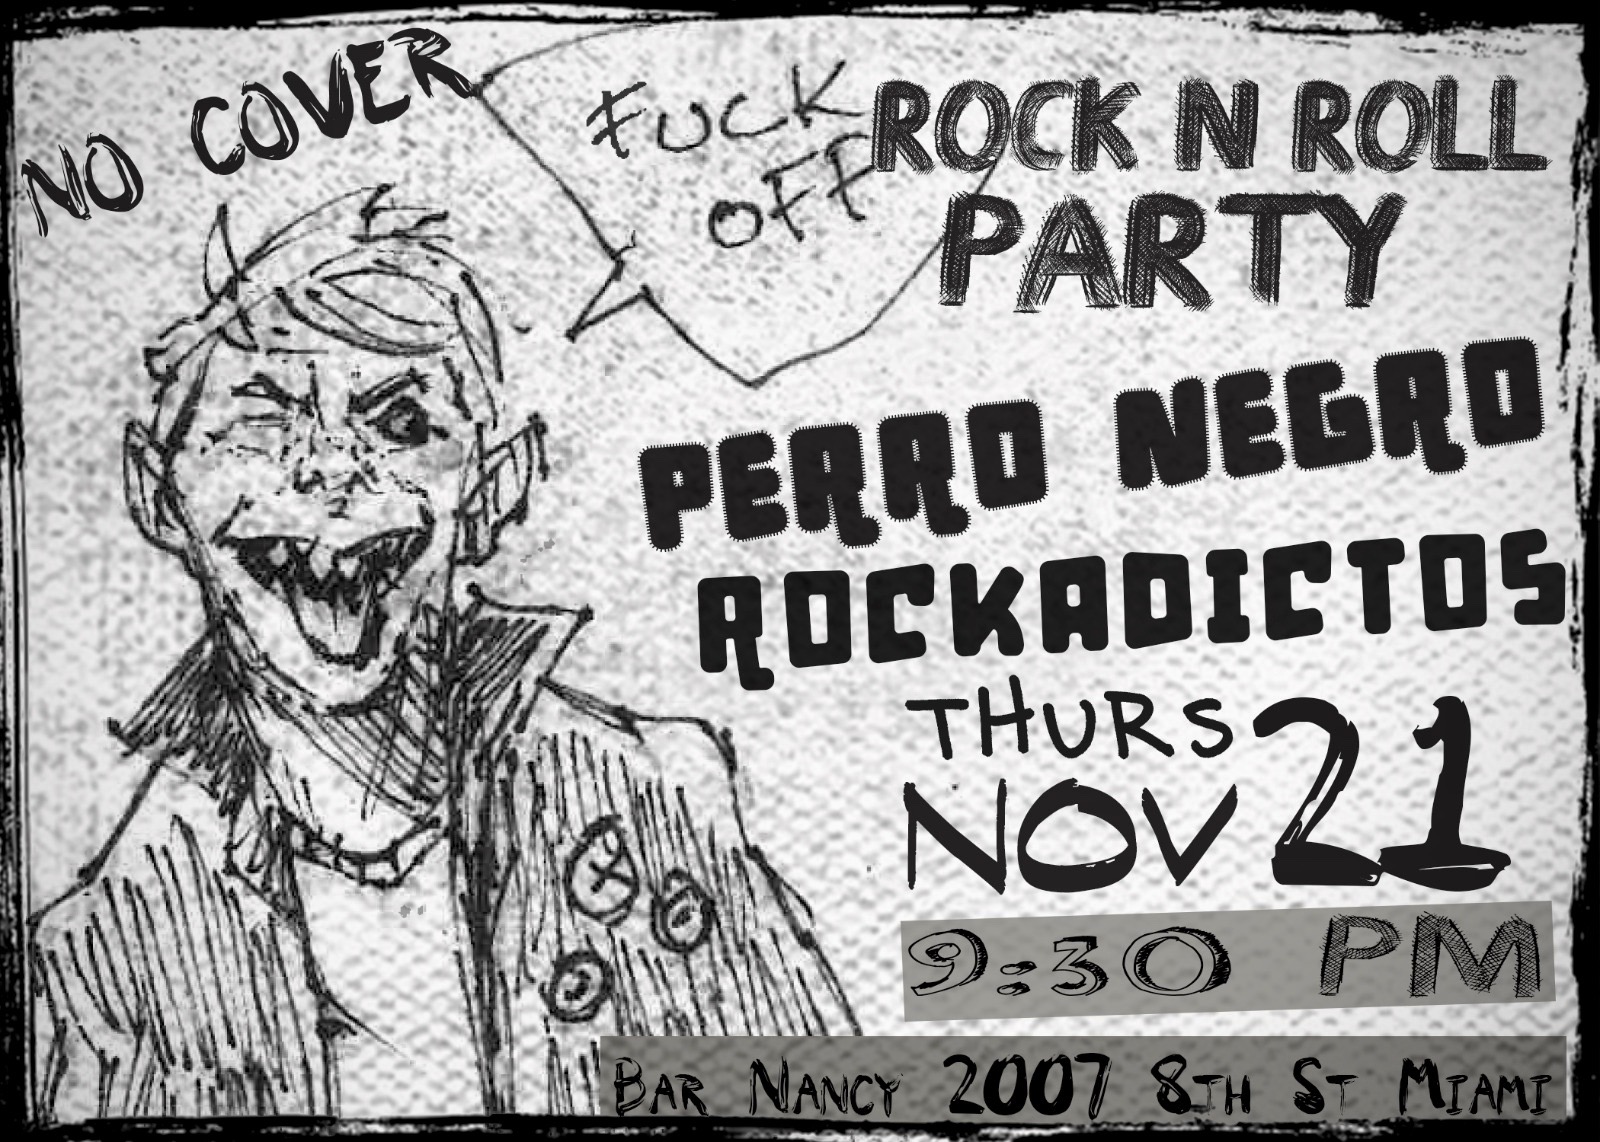 Perro Negro + Rockadictos! at Bar Nancy